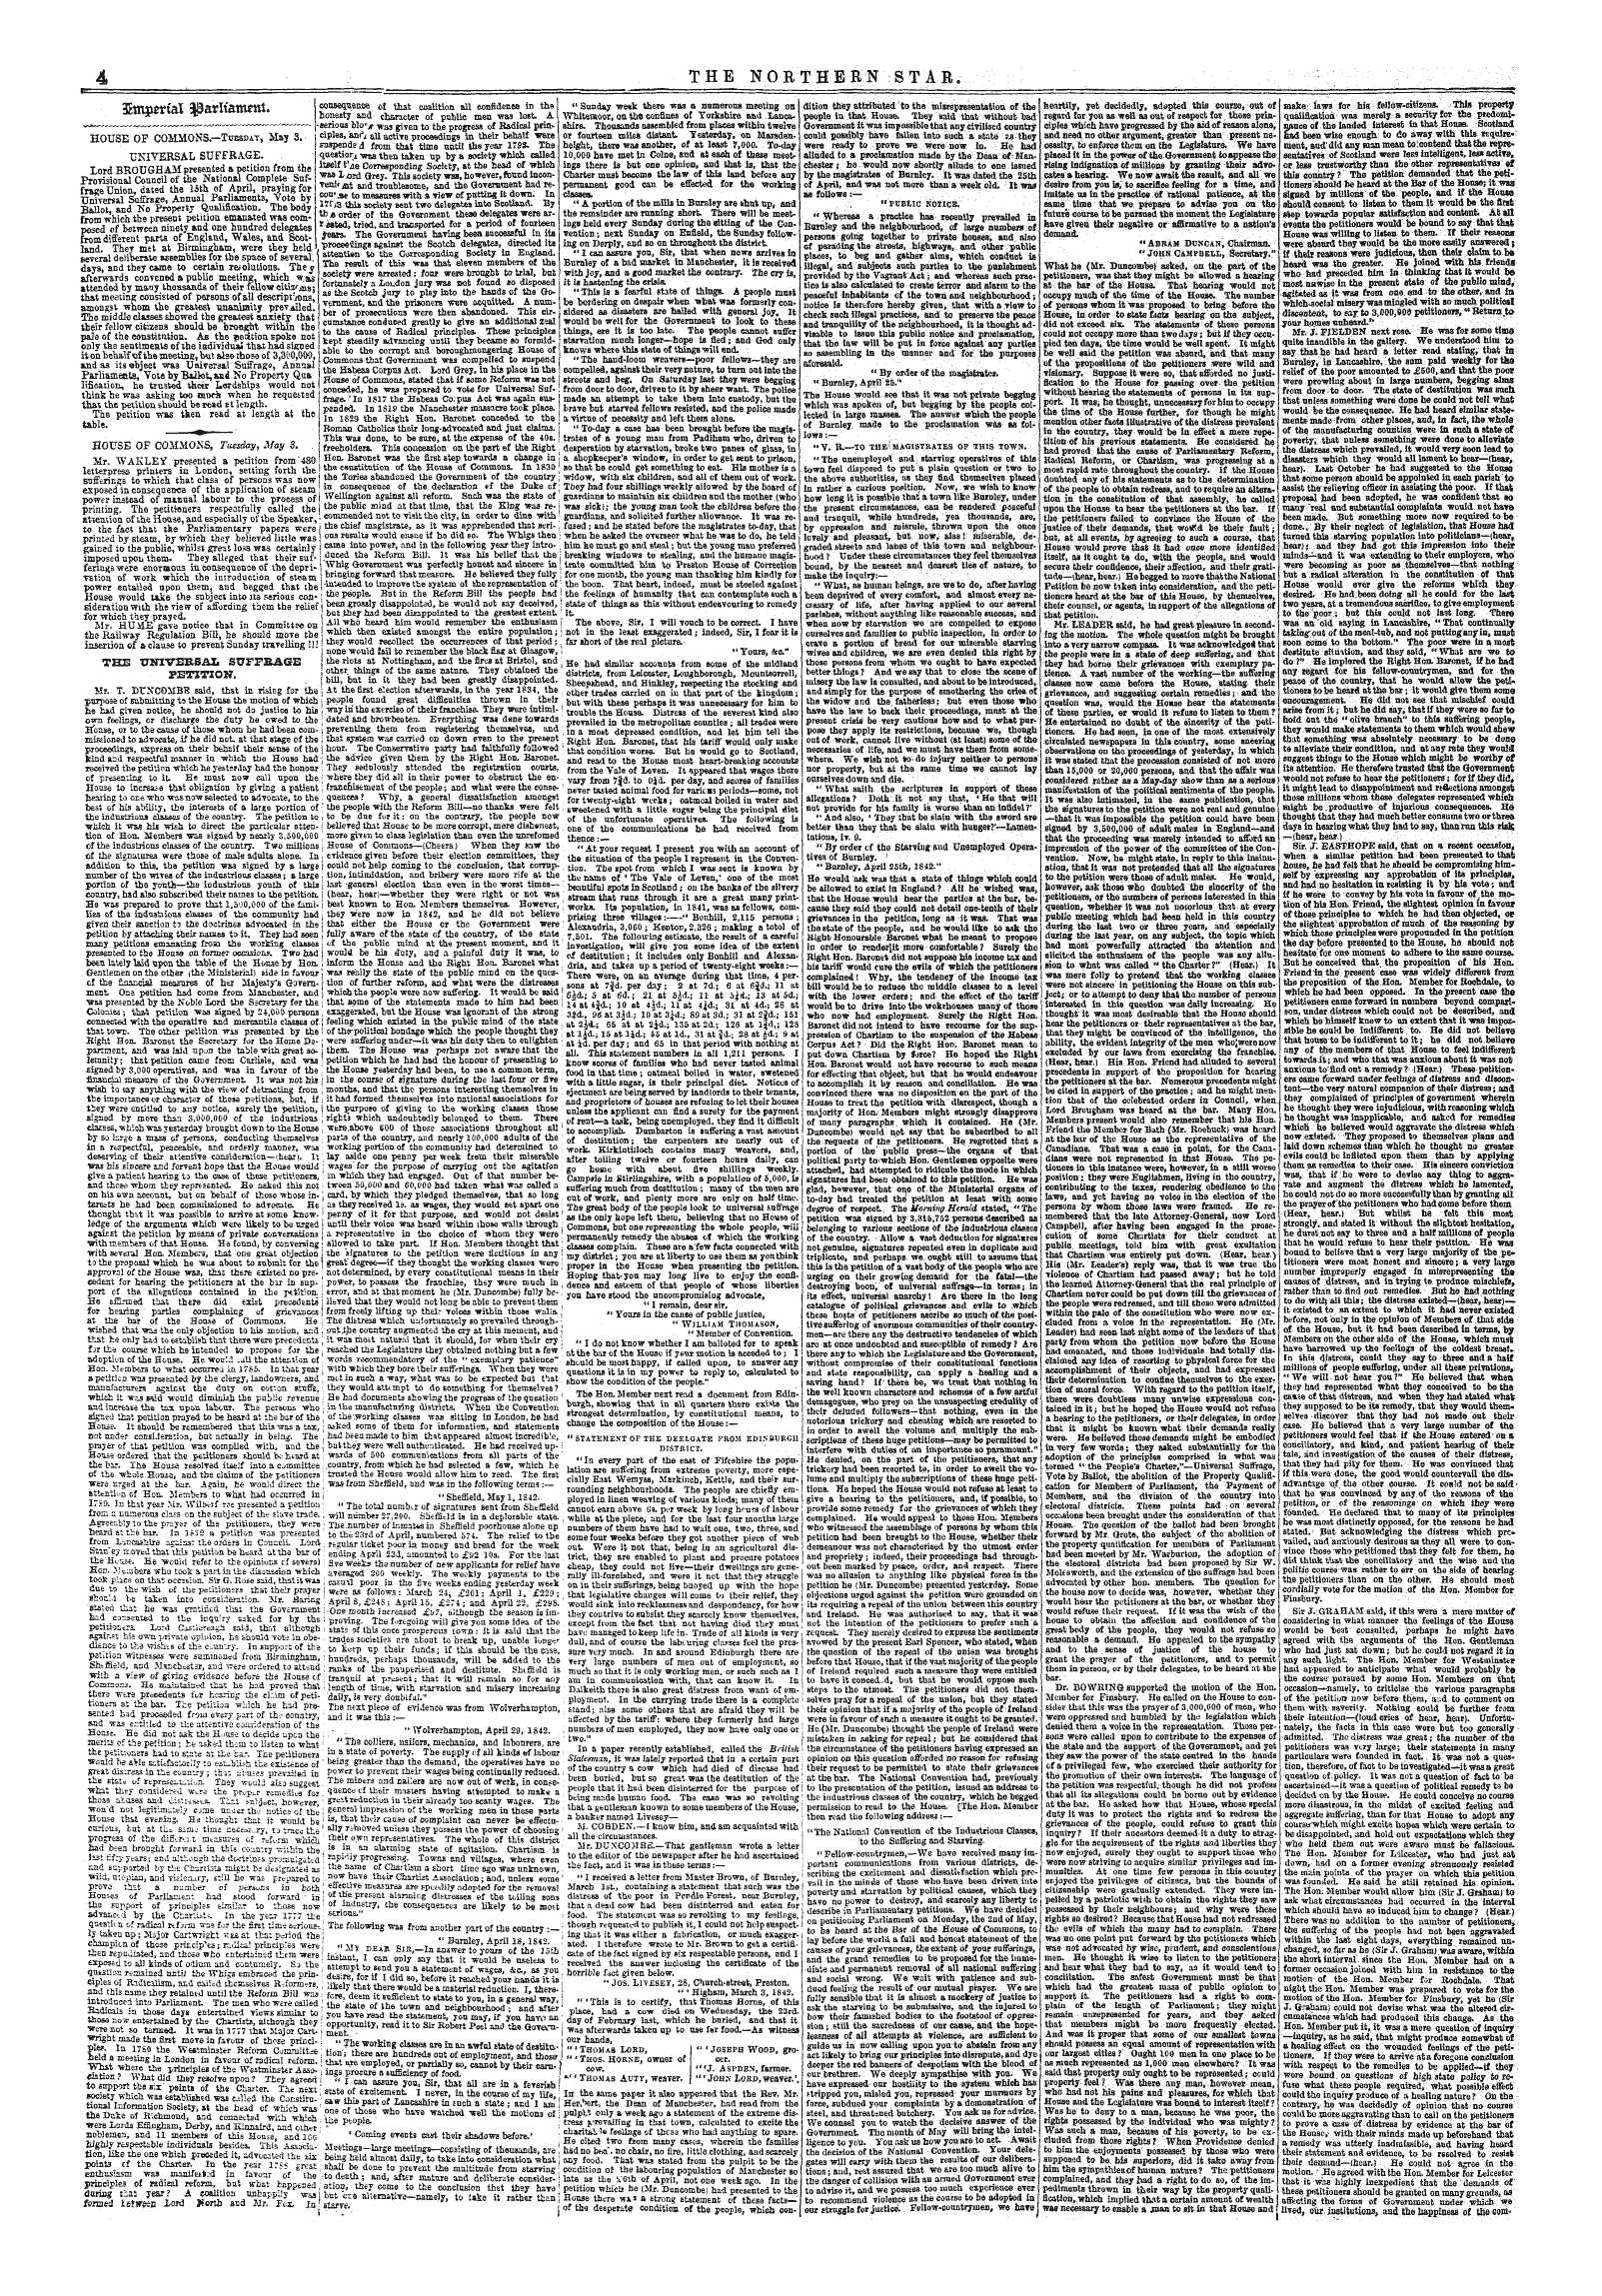 Northern Star (1837-1852): jS F Y, 1st edition - Benui^Rtal ^Arltament.